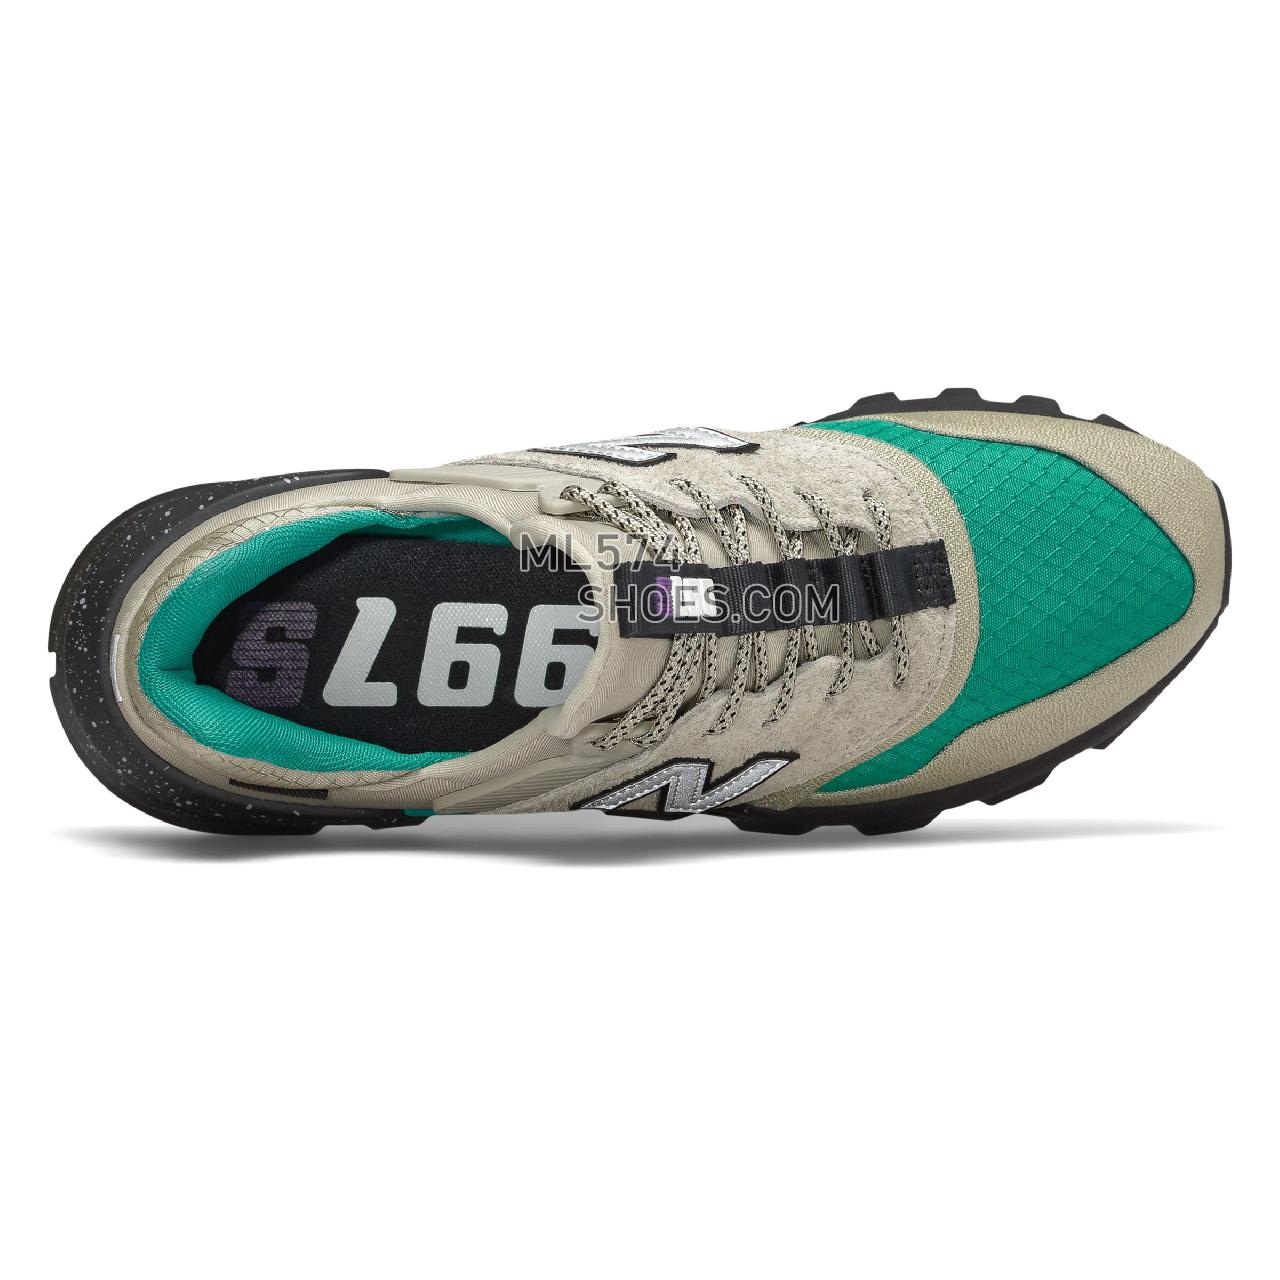 New Balance 997 Sport - Men's Sport Style Sneakers - Stonewear with Verdite - MS997SB